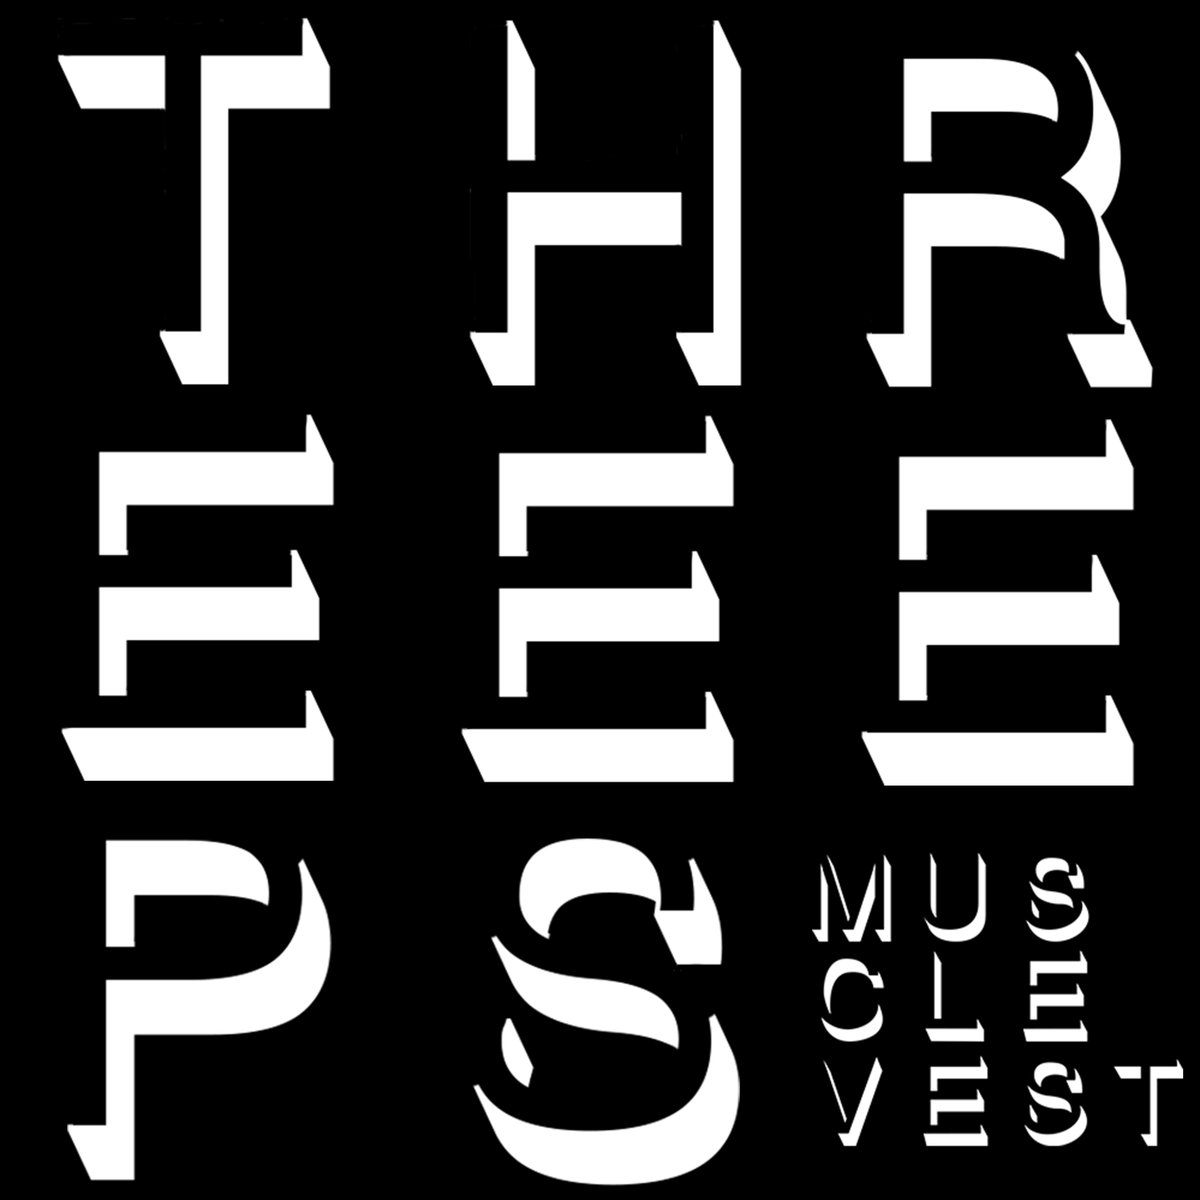 🎽 HAPPY RELEASE DAY TO @VestMuscle 🎽 'THREEEPS' is out today via @PrankMonkeyRecs! Spotify: spoti.fi/3uCsfN5 YouTube: youtu.be/V5_mT0R8ekU #HTdigiReleaseDay